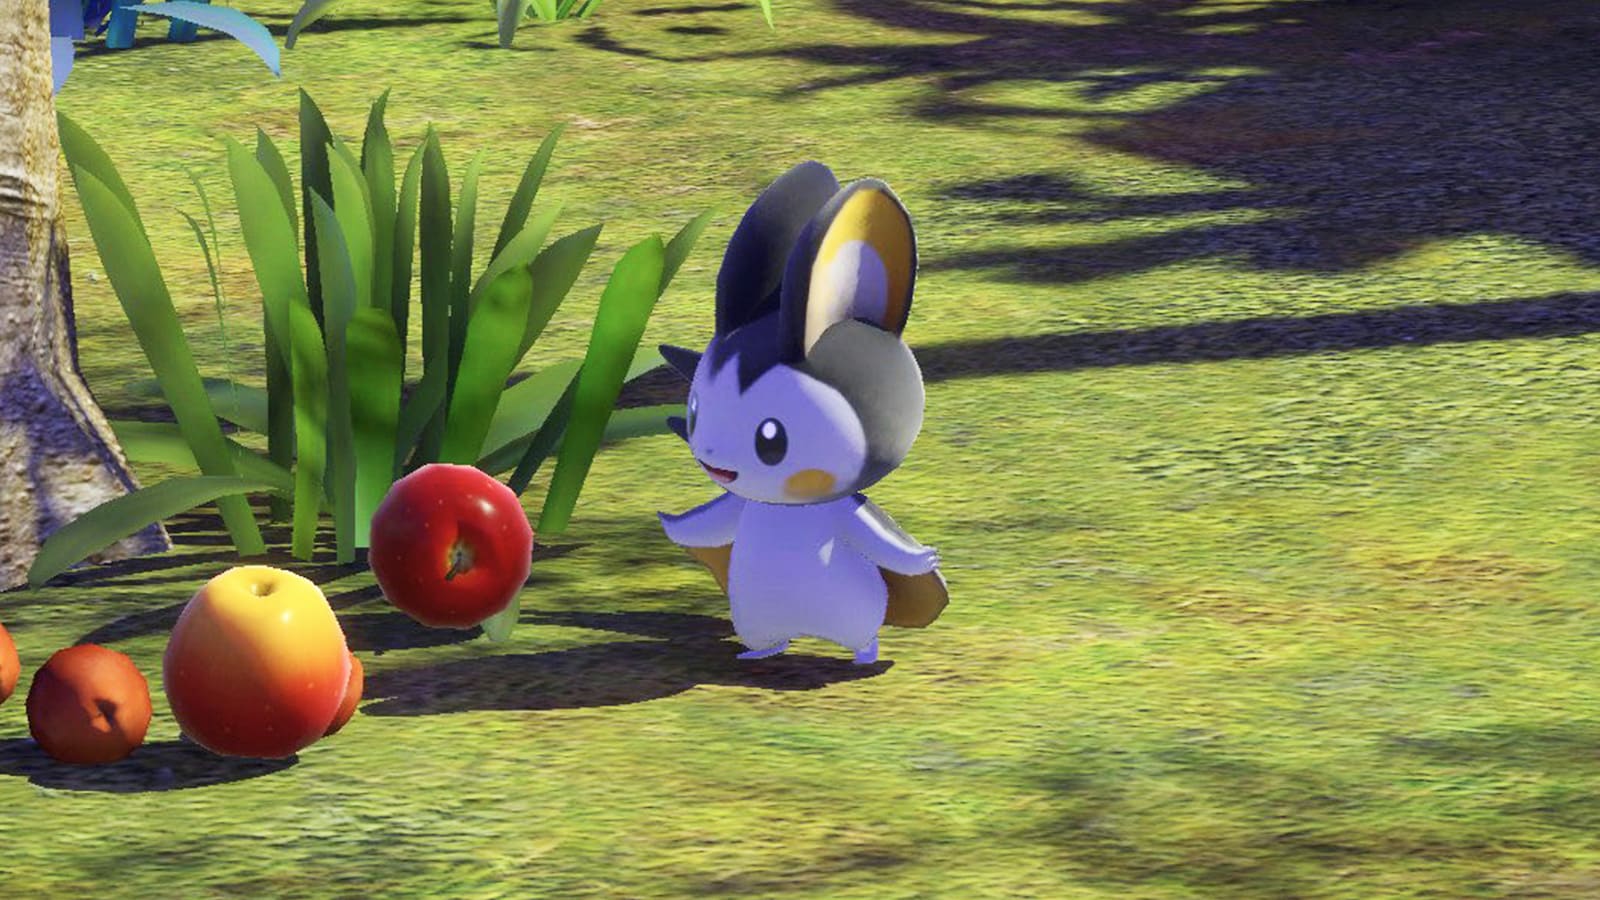 Emolga eating fruit in New Pokemon Snap